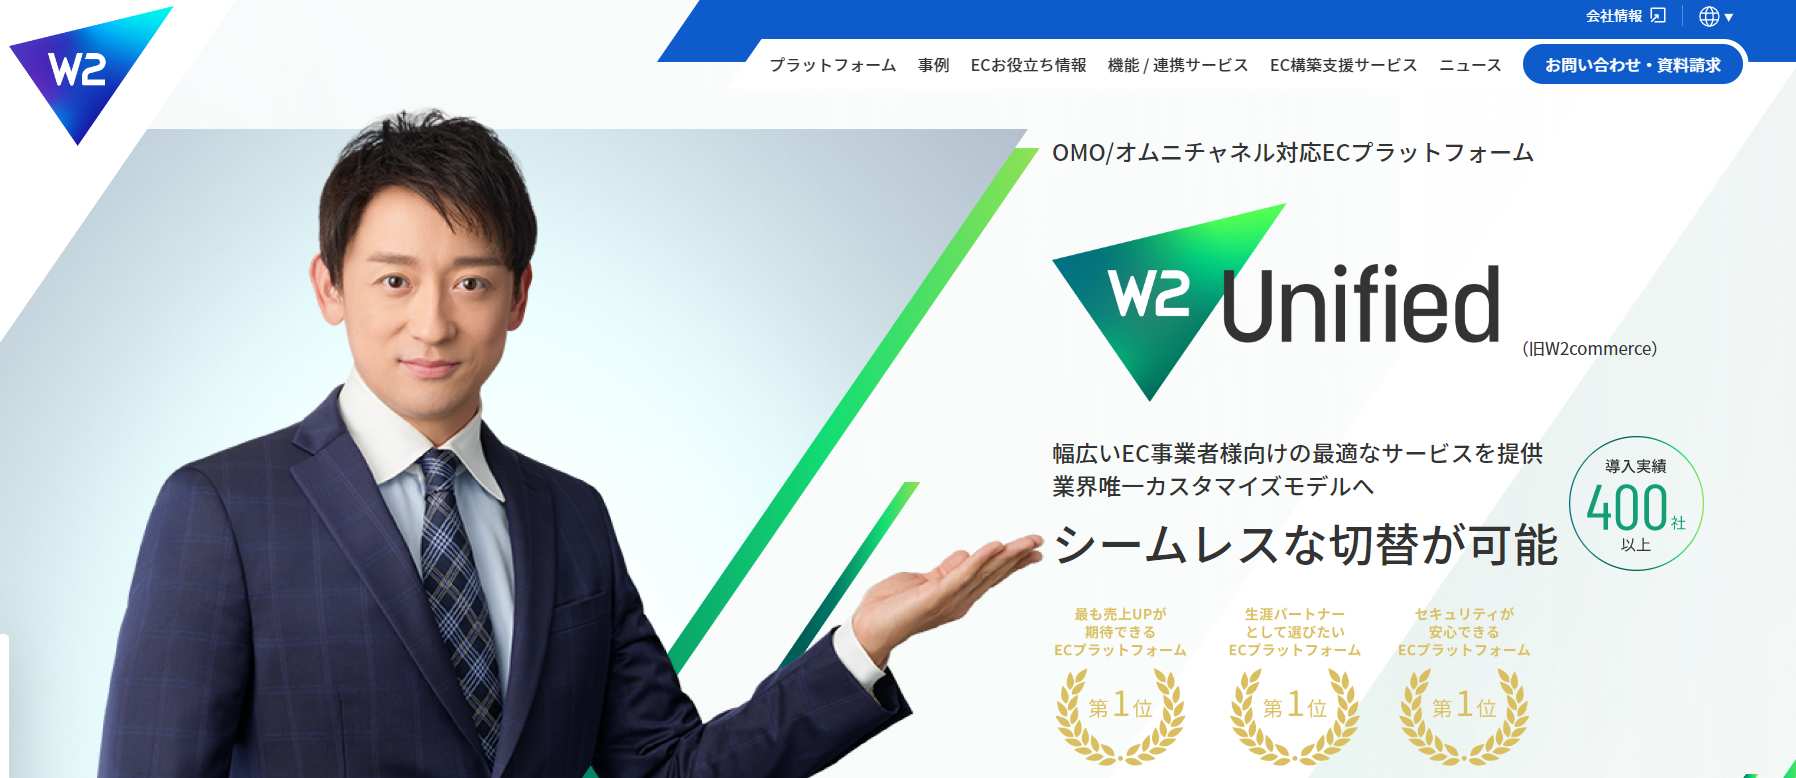 W2 Unified（旧:w2Commerce）